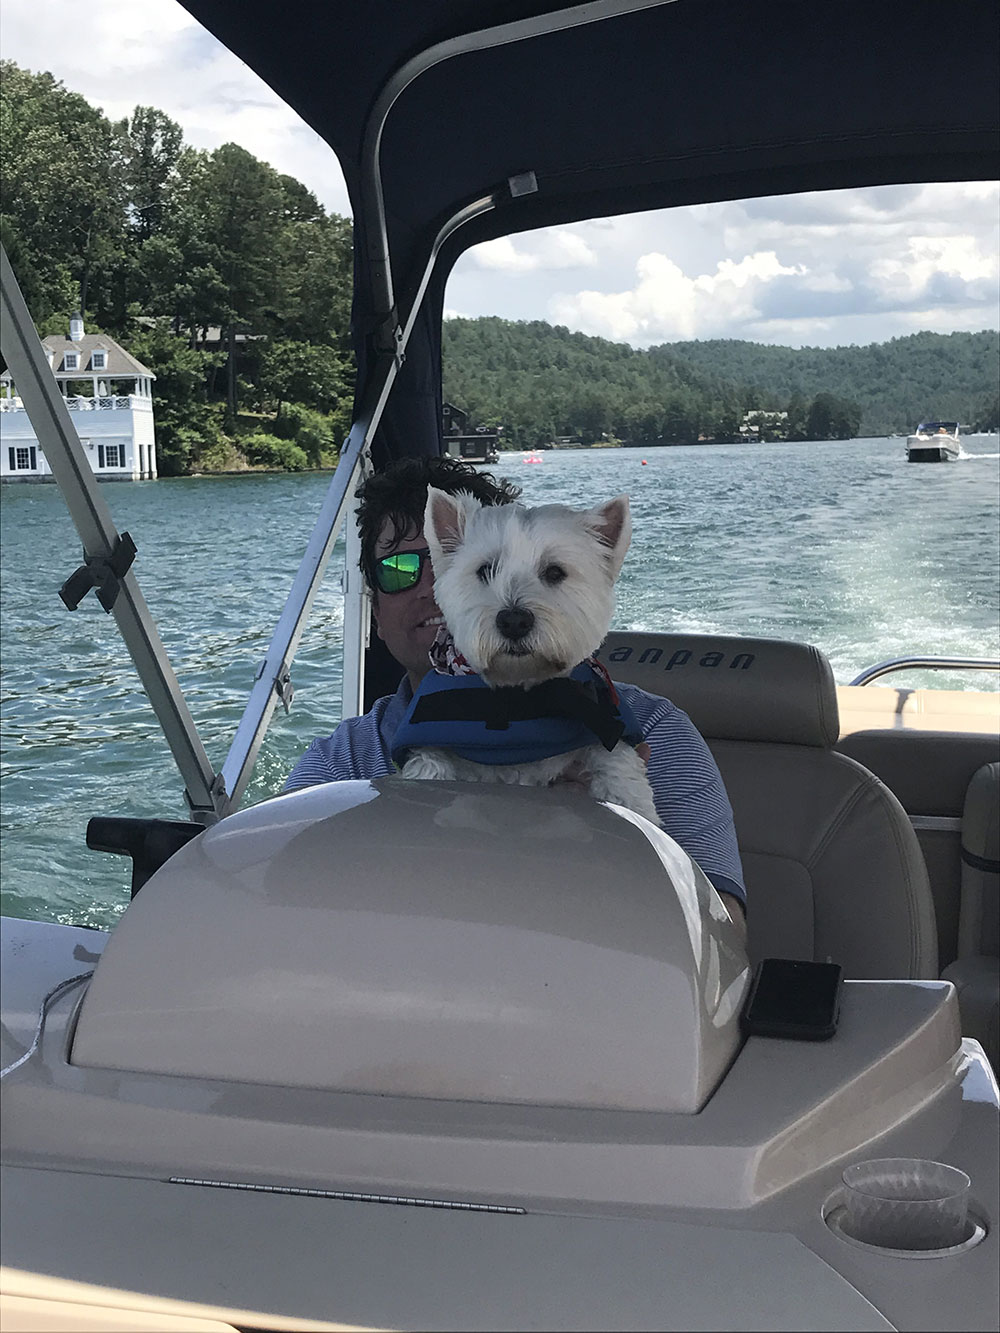 A happy dog rides along in the ski boat on Lake Rabun